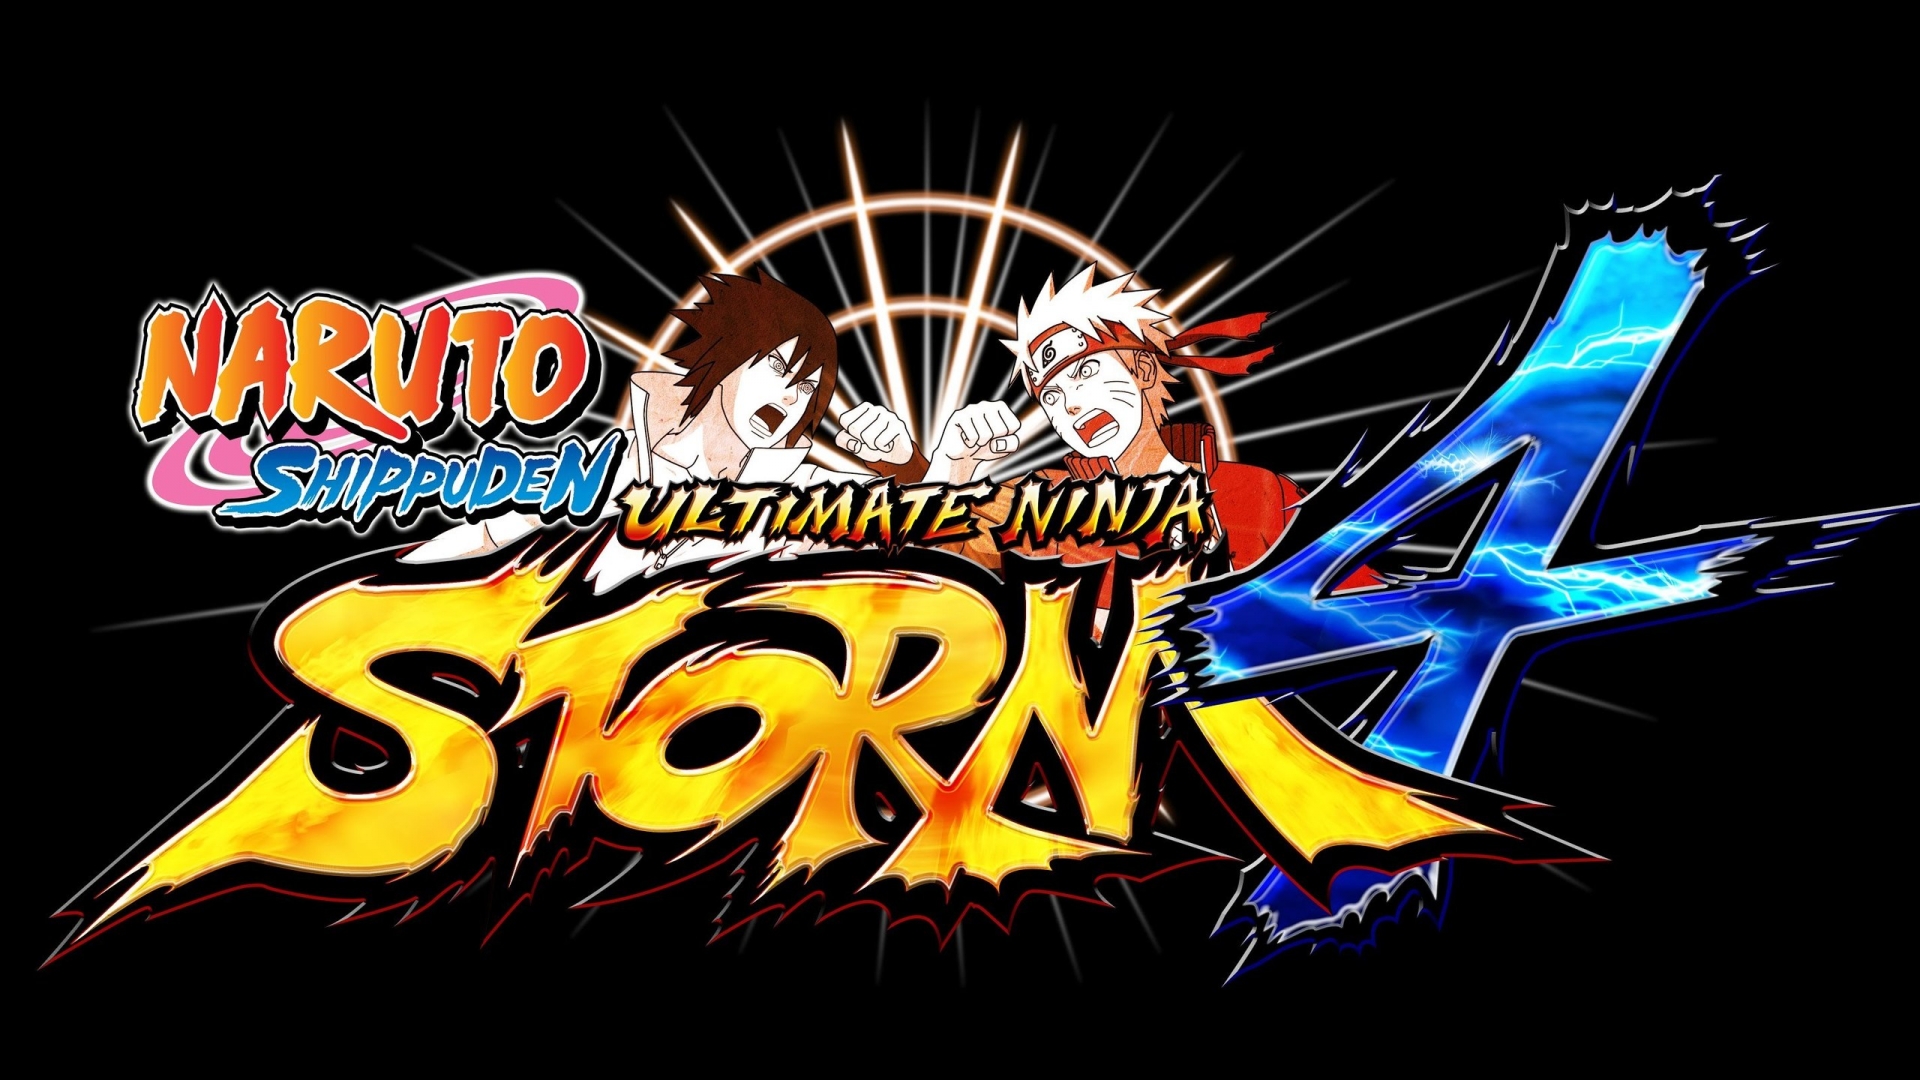 Naruto Shippuden Ultimate Ninja Storm 4 Poster for 1920 x 1080 HDTV 1080p resolution